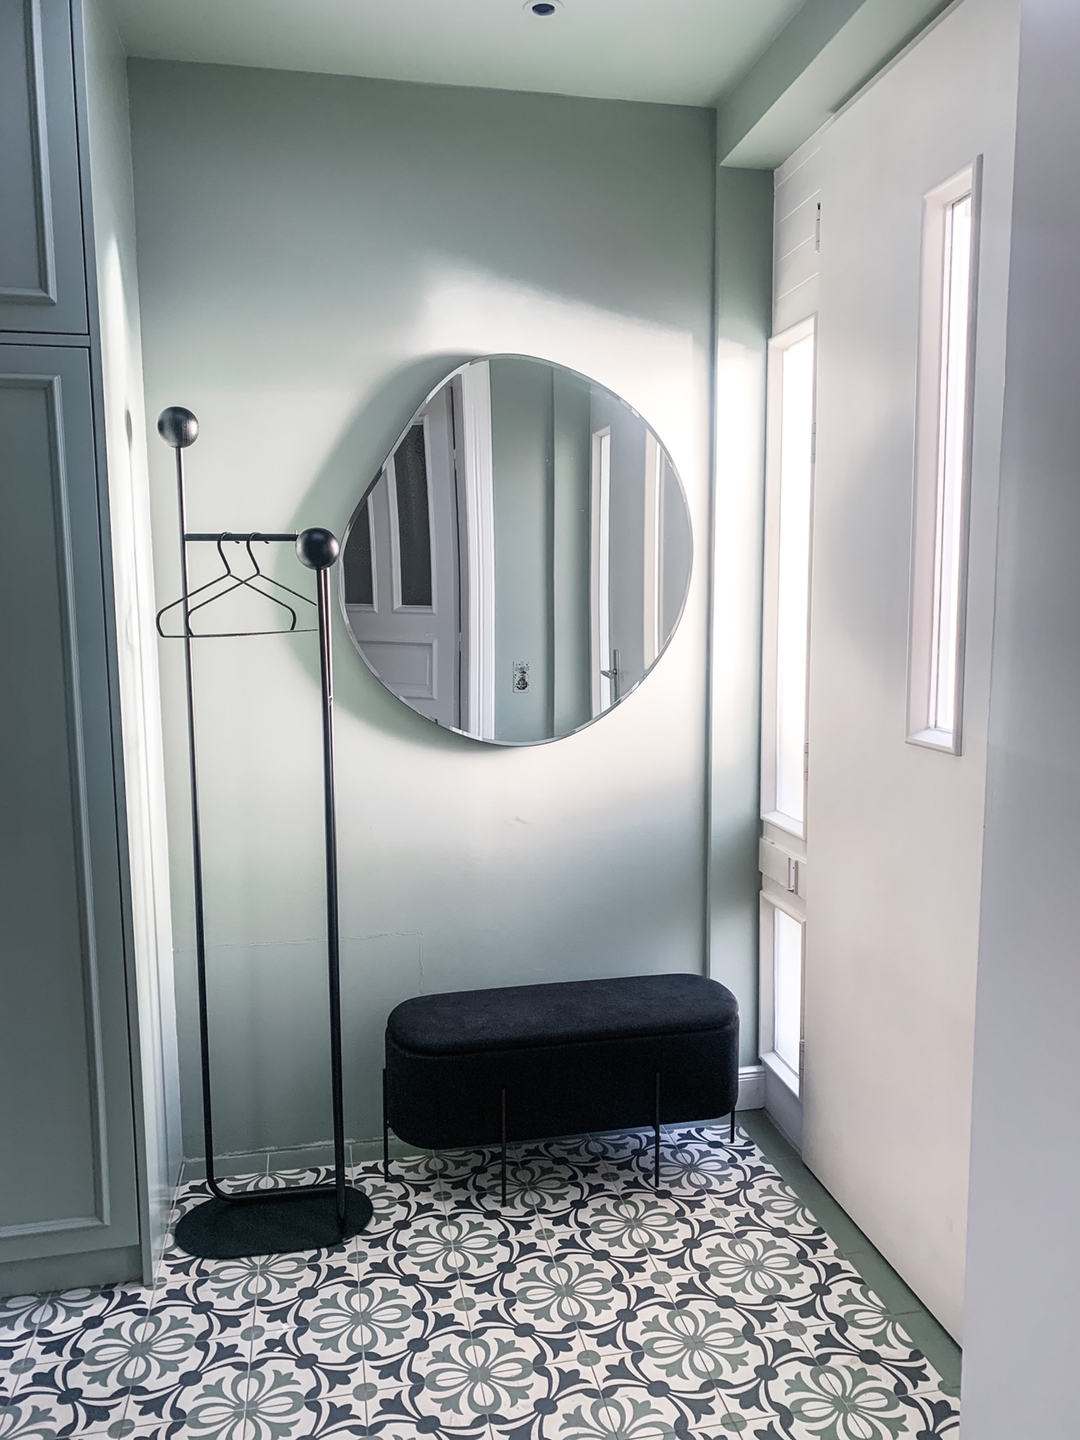 W E L C O M E
_______________

#casaP #gründerzeit #home  #hallwayinspo #hallwaydecor #interiordecoration  #mirror